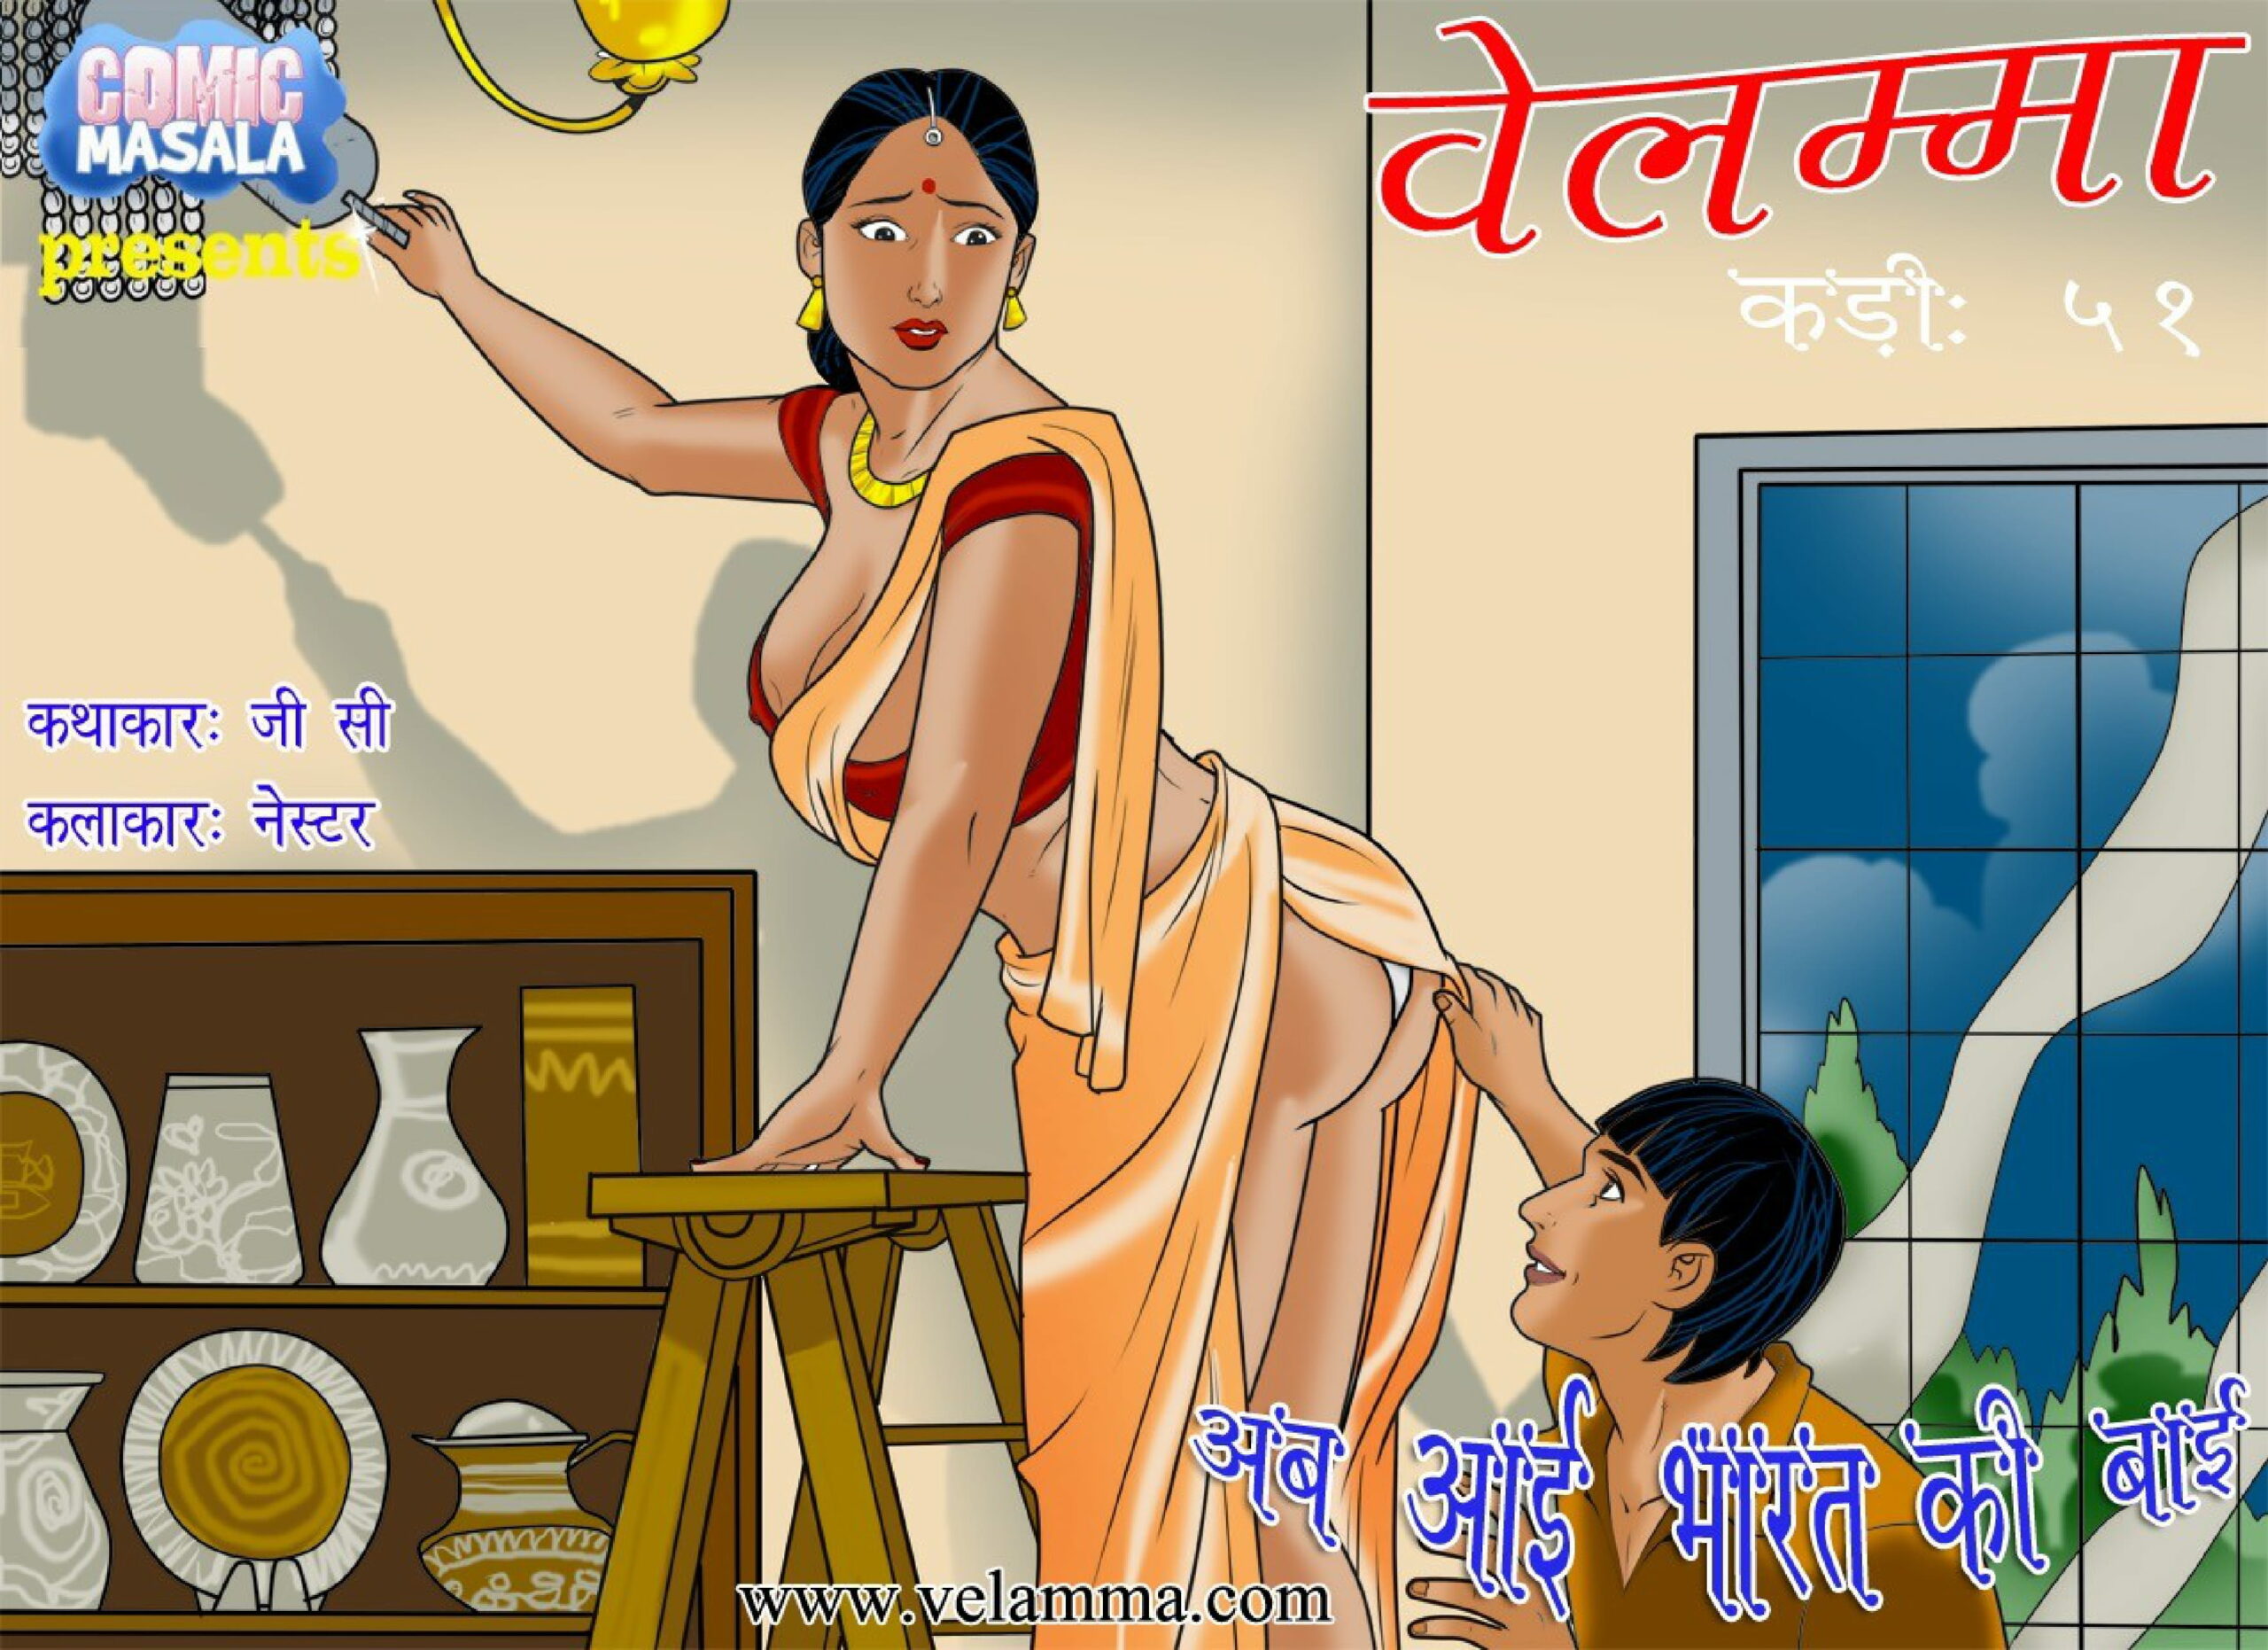 Velamma Episode 51 Hindi – Bhartiya naukrani (भारतीय नौकरानी) - 23 - FSIComics